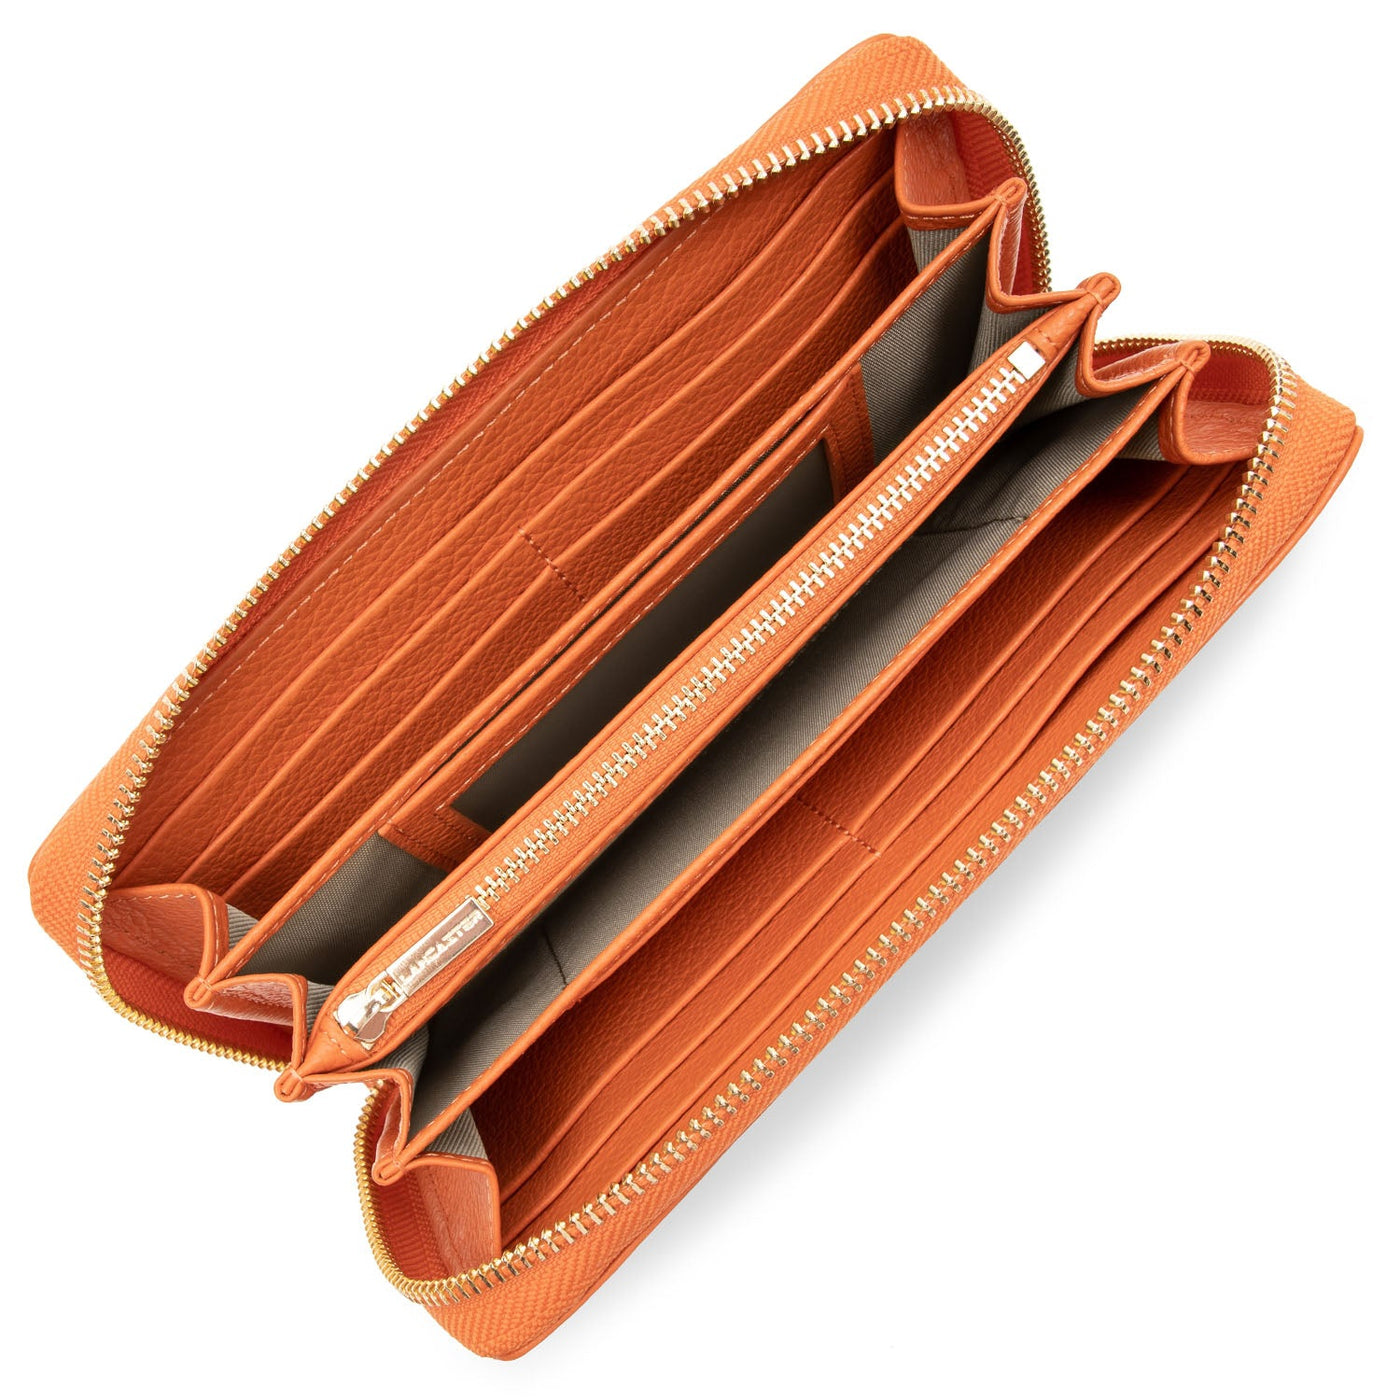 organizer wallet - dune #couleur_orange